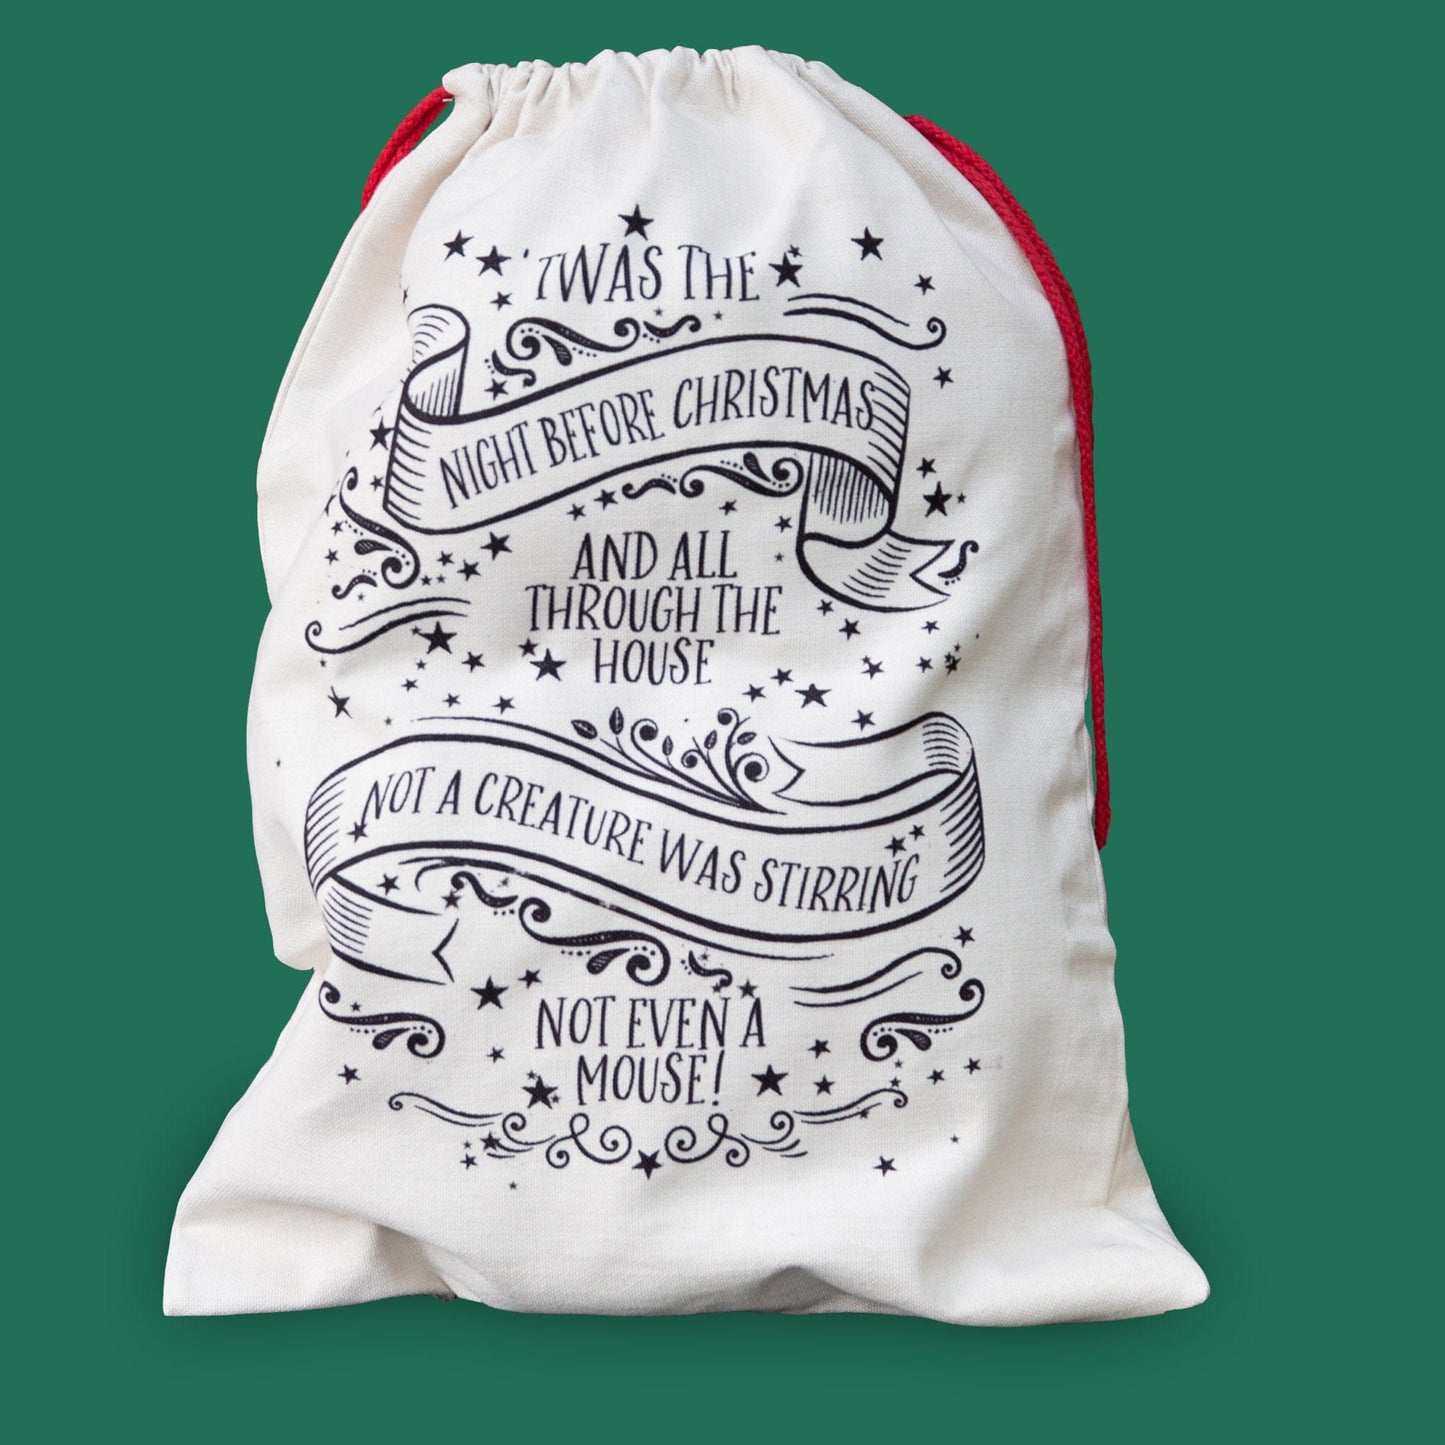 Traditional personalised santa sack - 'Twas the night before Christmas' - Chirstmas Eve Box alternative